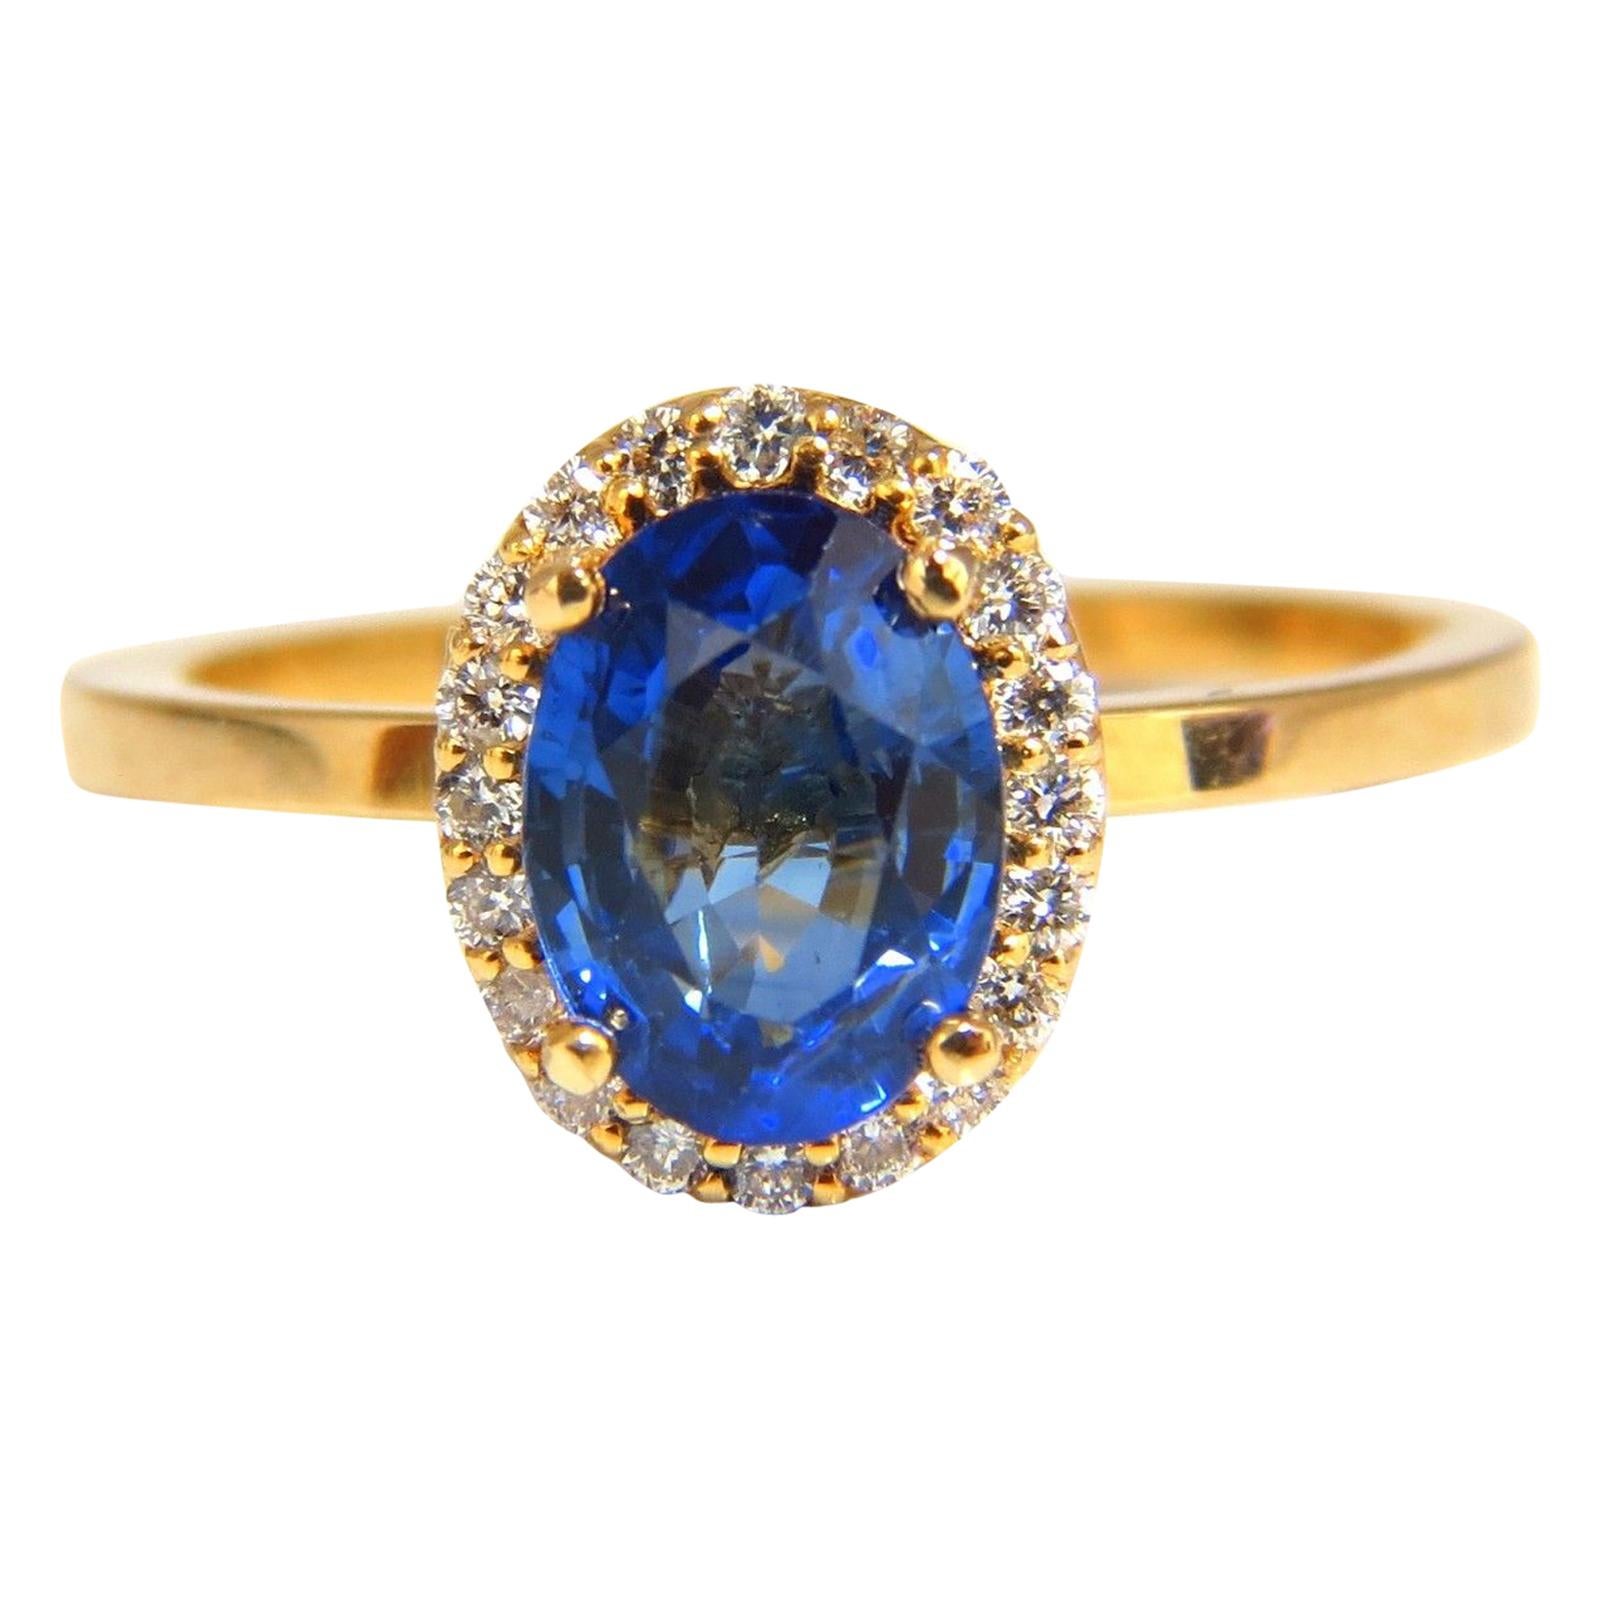 Bague en or 18 carats avec saphir bleu vif naturel de 2,18 carats et diamants en forme de petit halo